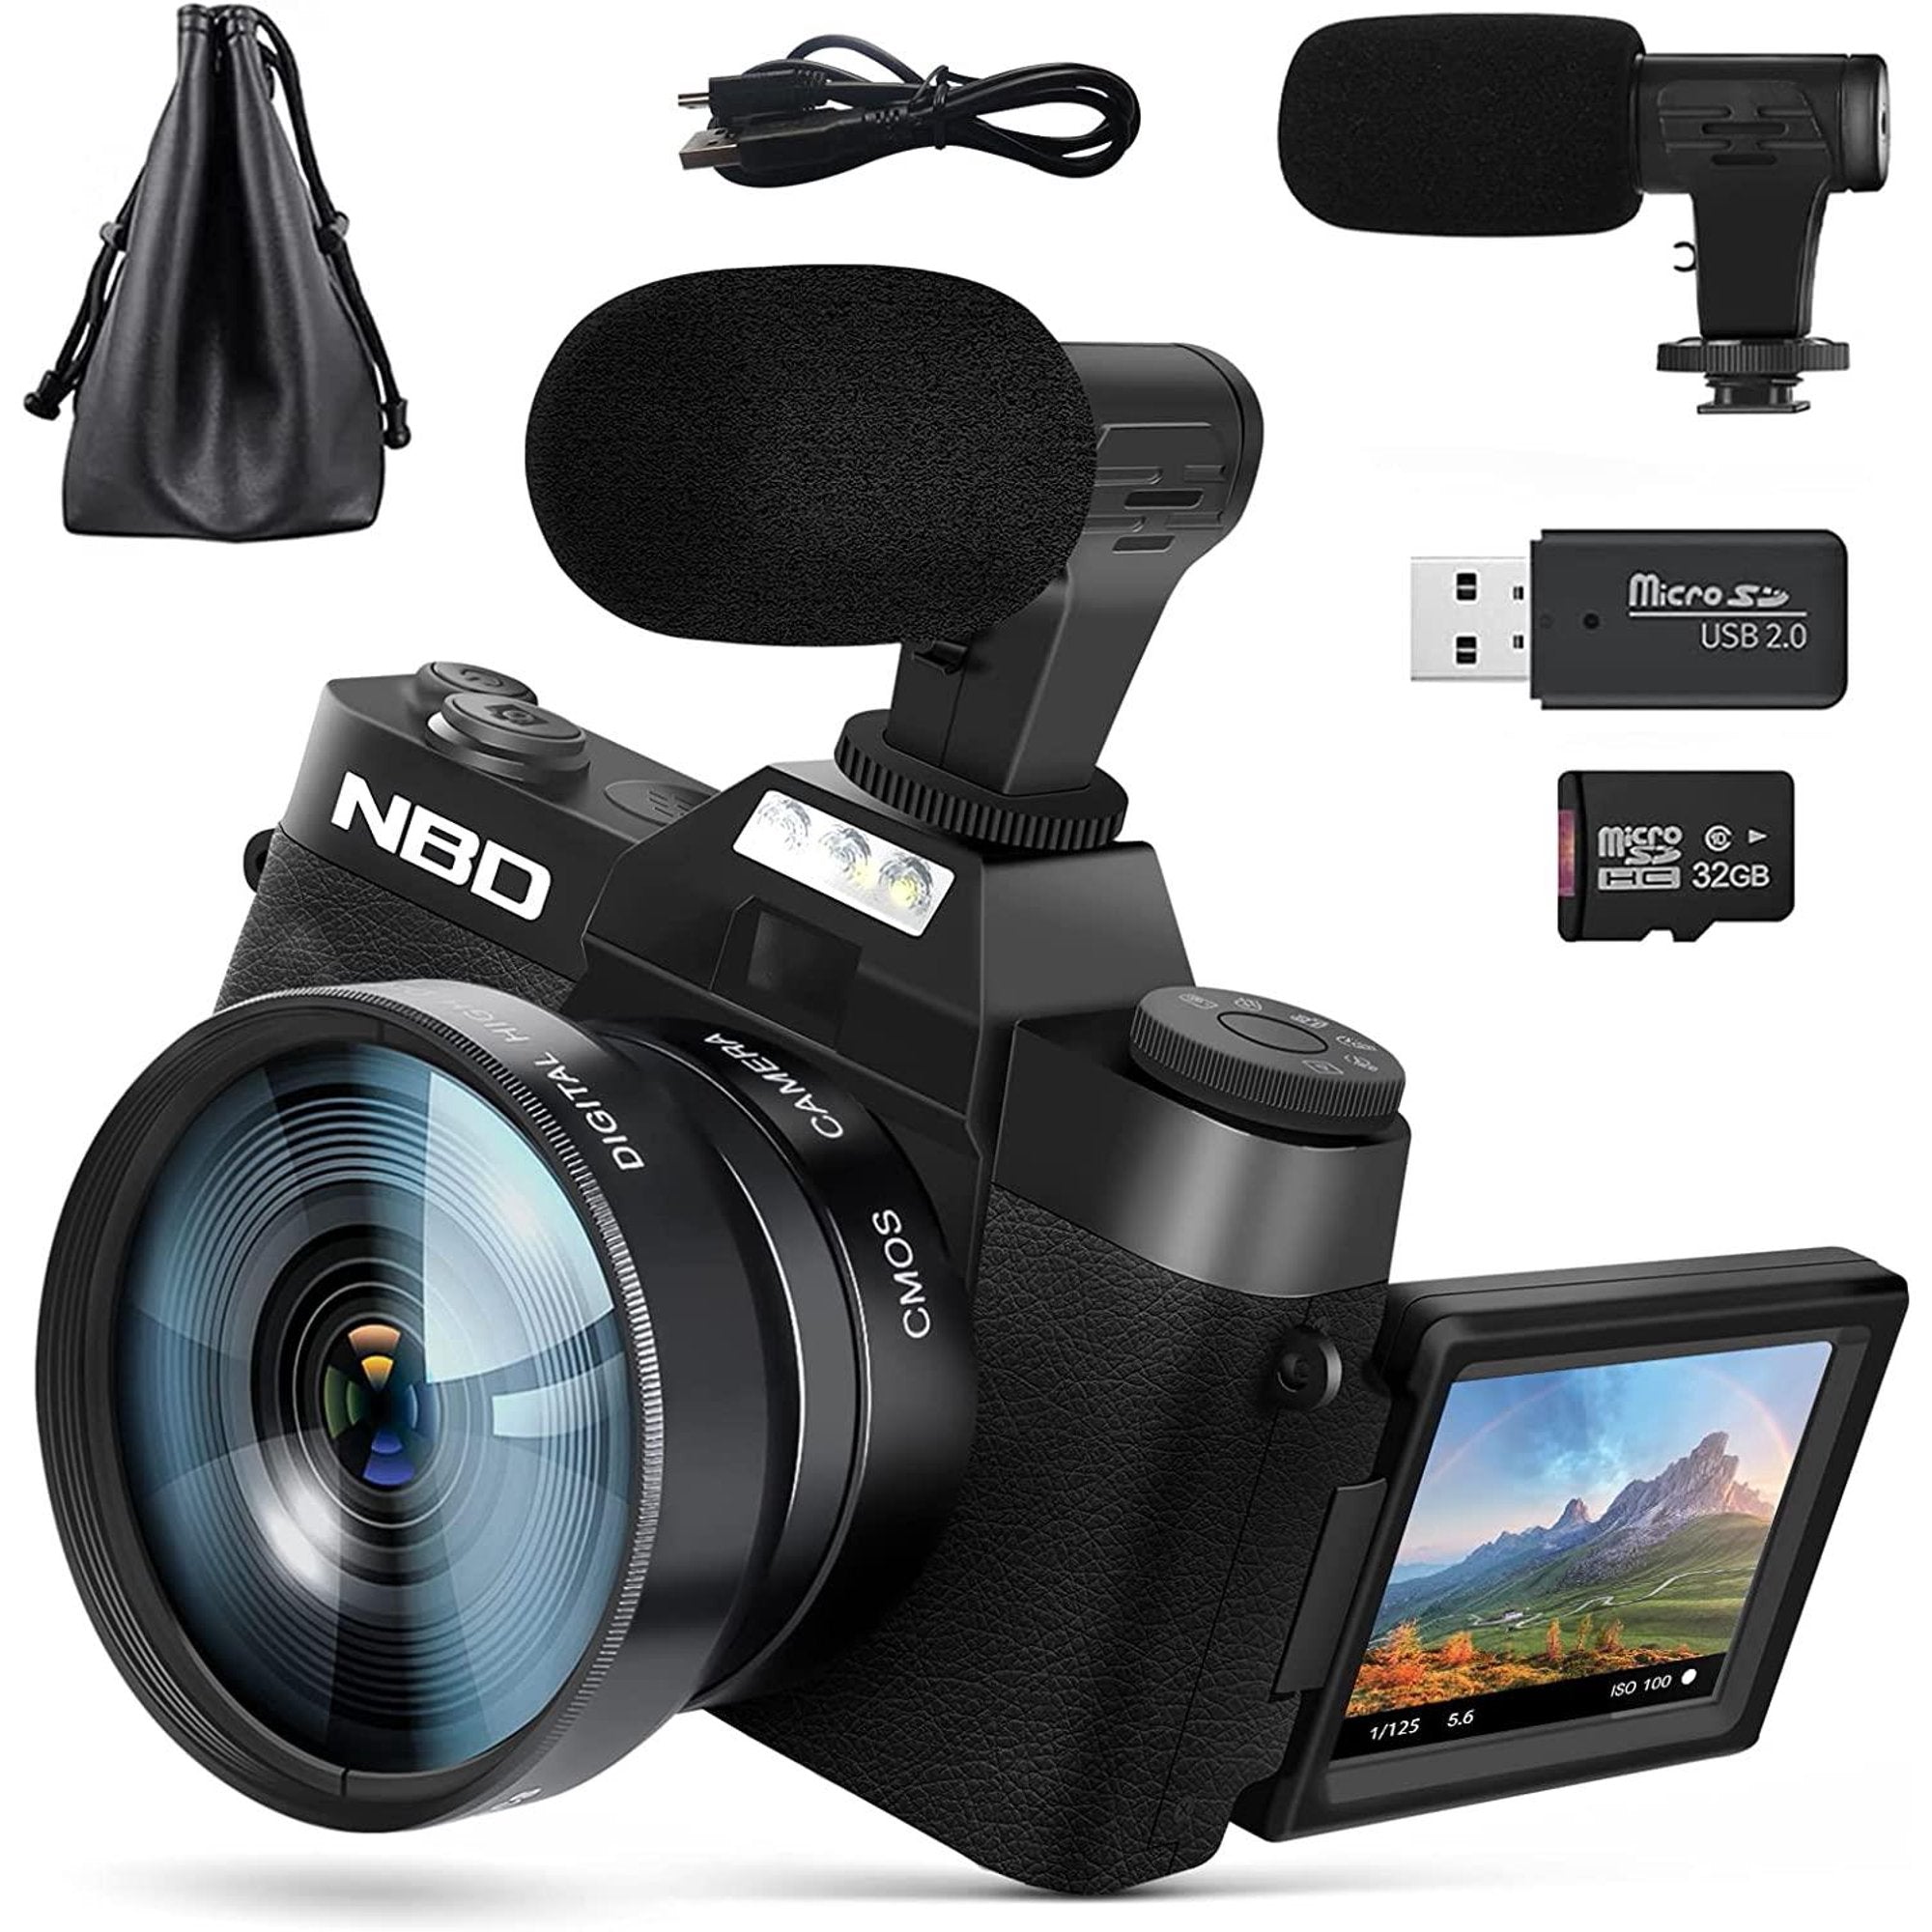 Cámara digital NBD Cámara compacta 4K 48MP, cámara de vlogging de   con pantalla ultra clara de 3.0 pulgadas, cámara de video con zoom